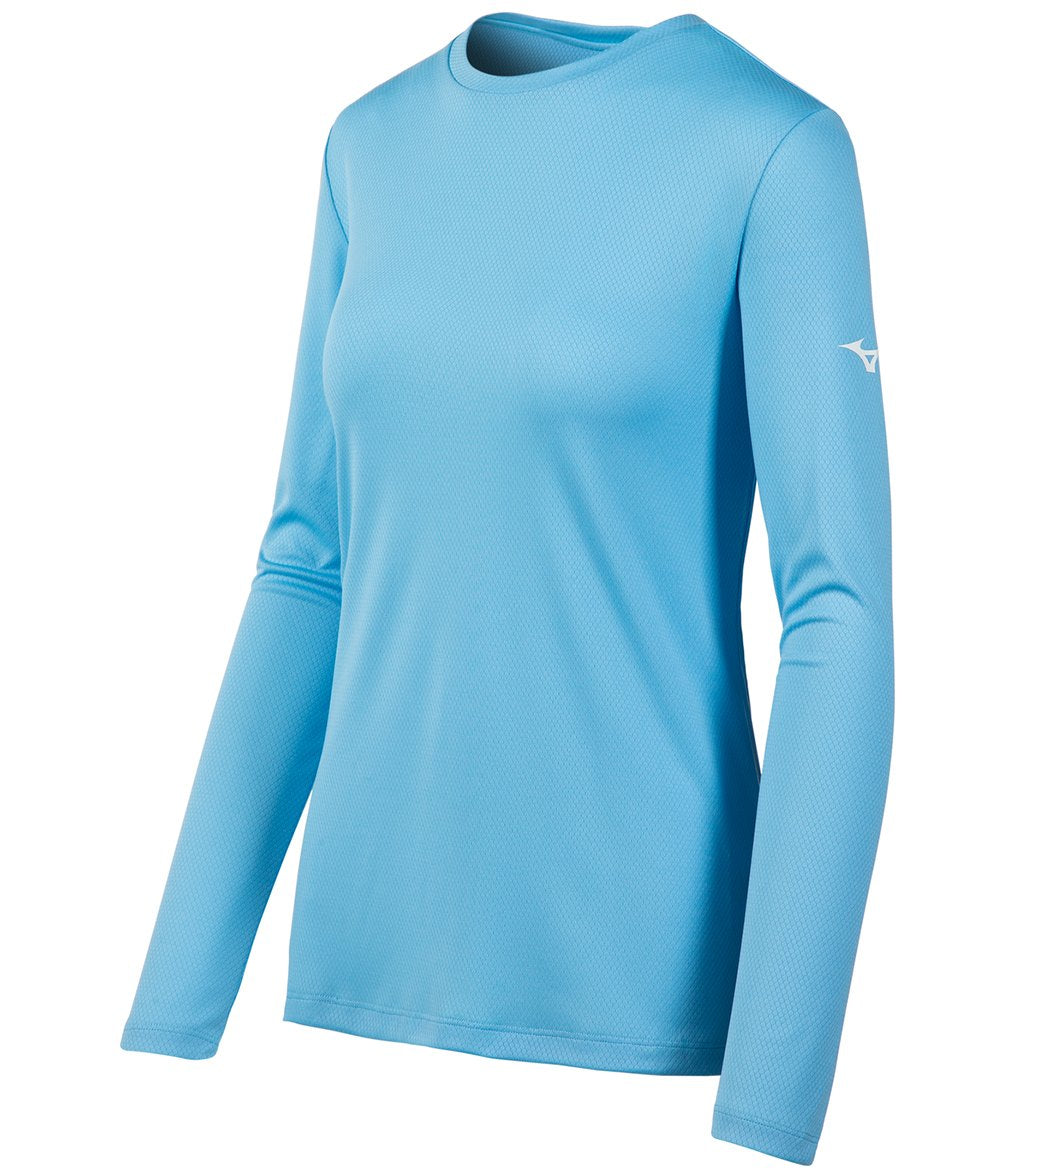 Mizuno Women's Long Sleeve Tee Shirt - Light Blue Large Polyester - Swimoutlet.com